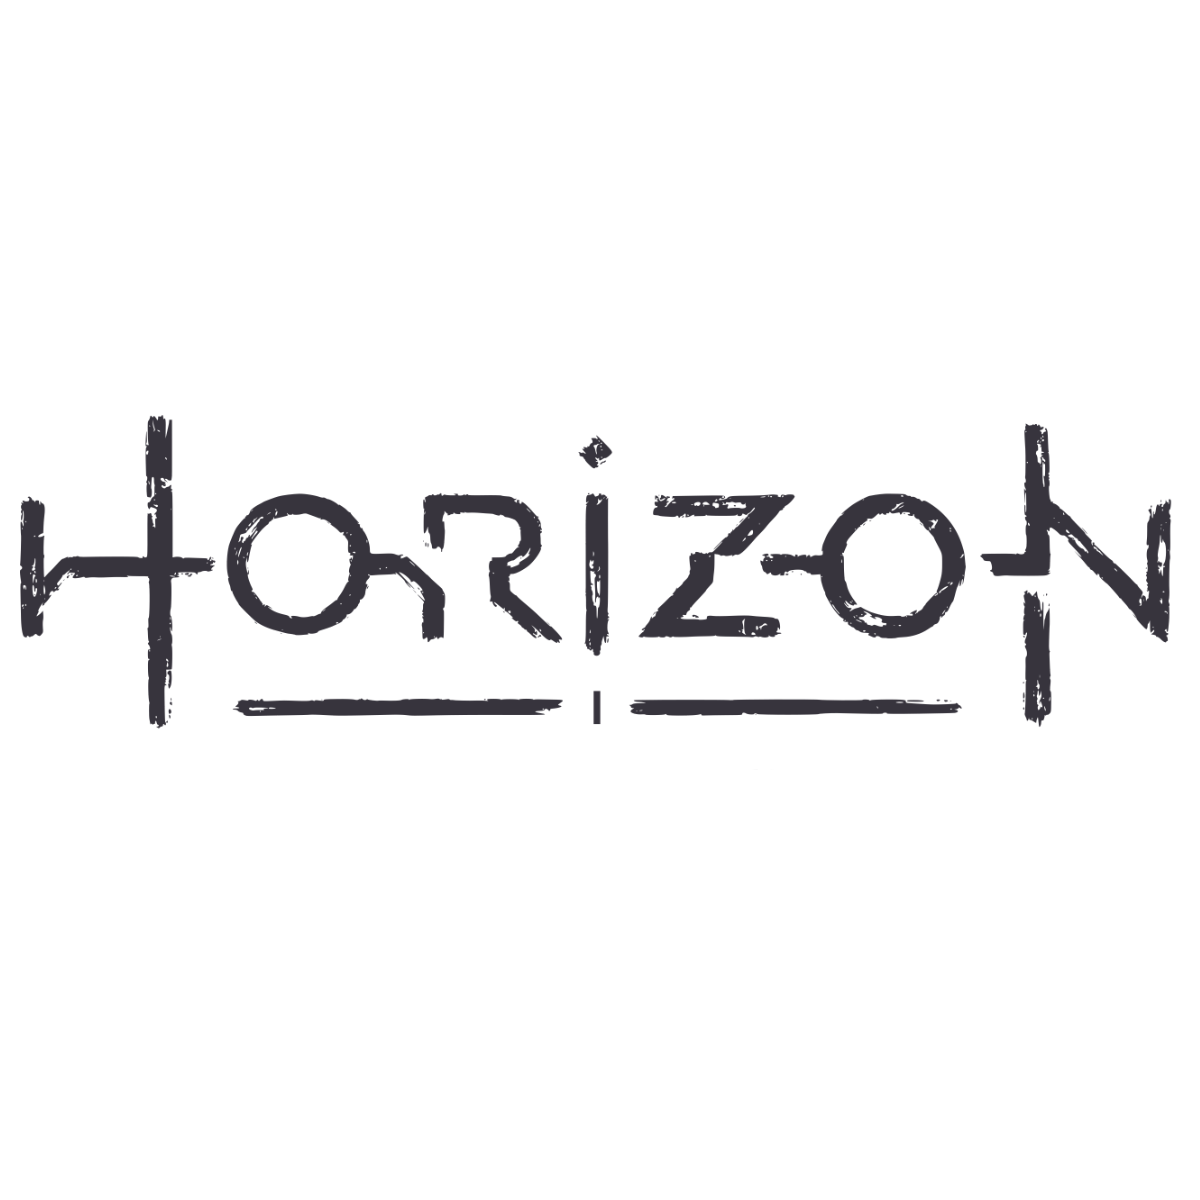 Horizon Series